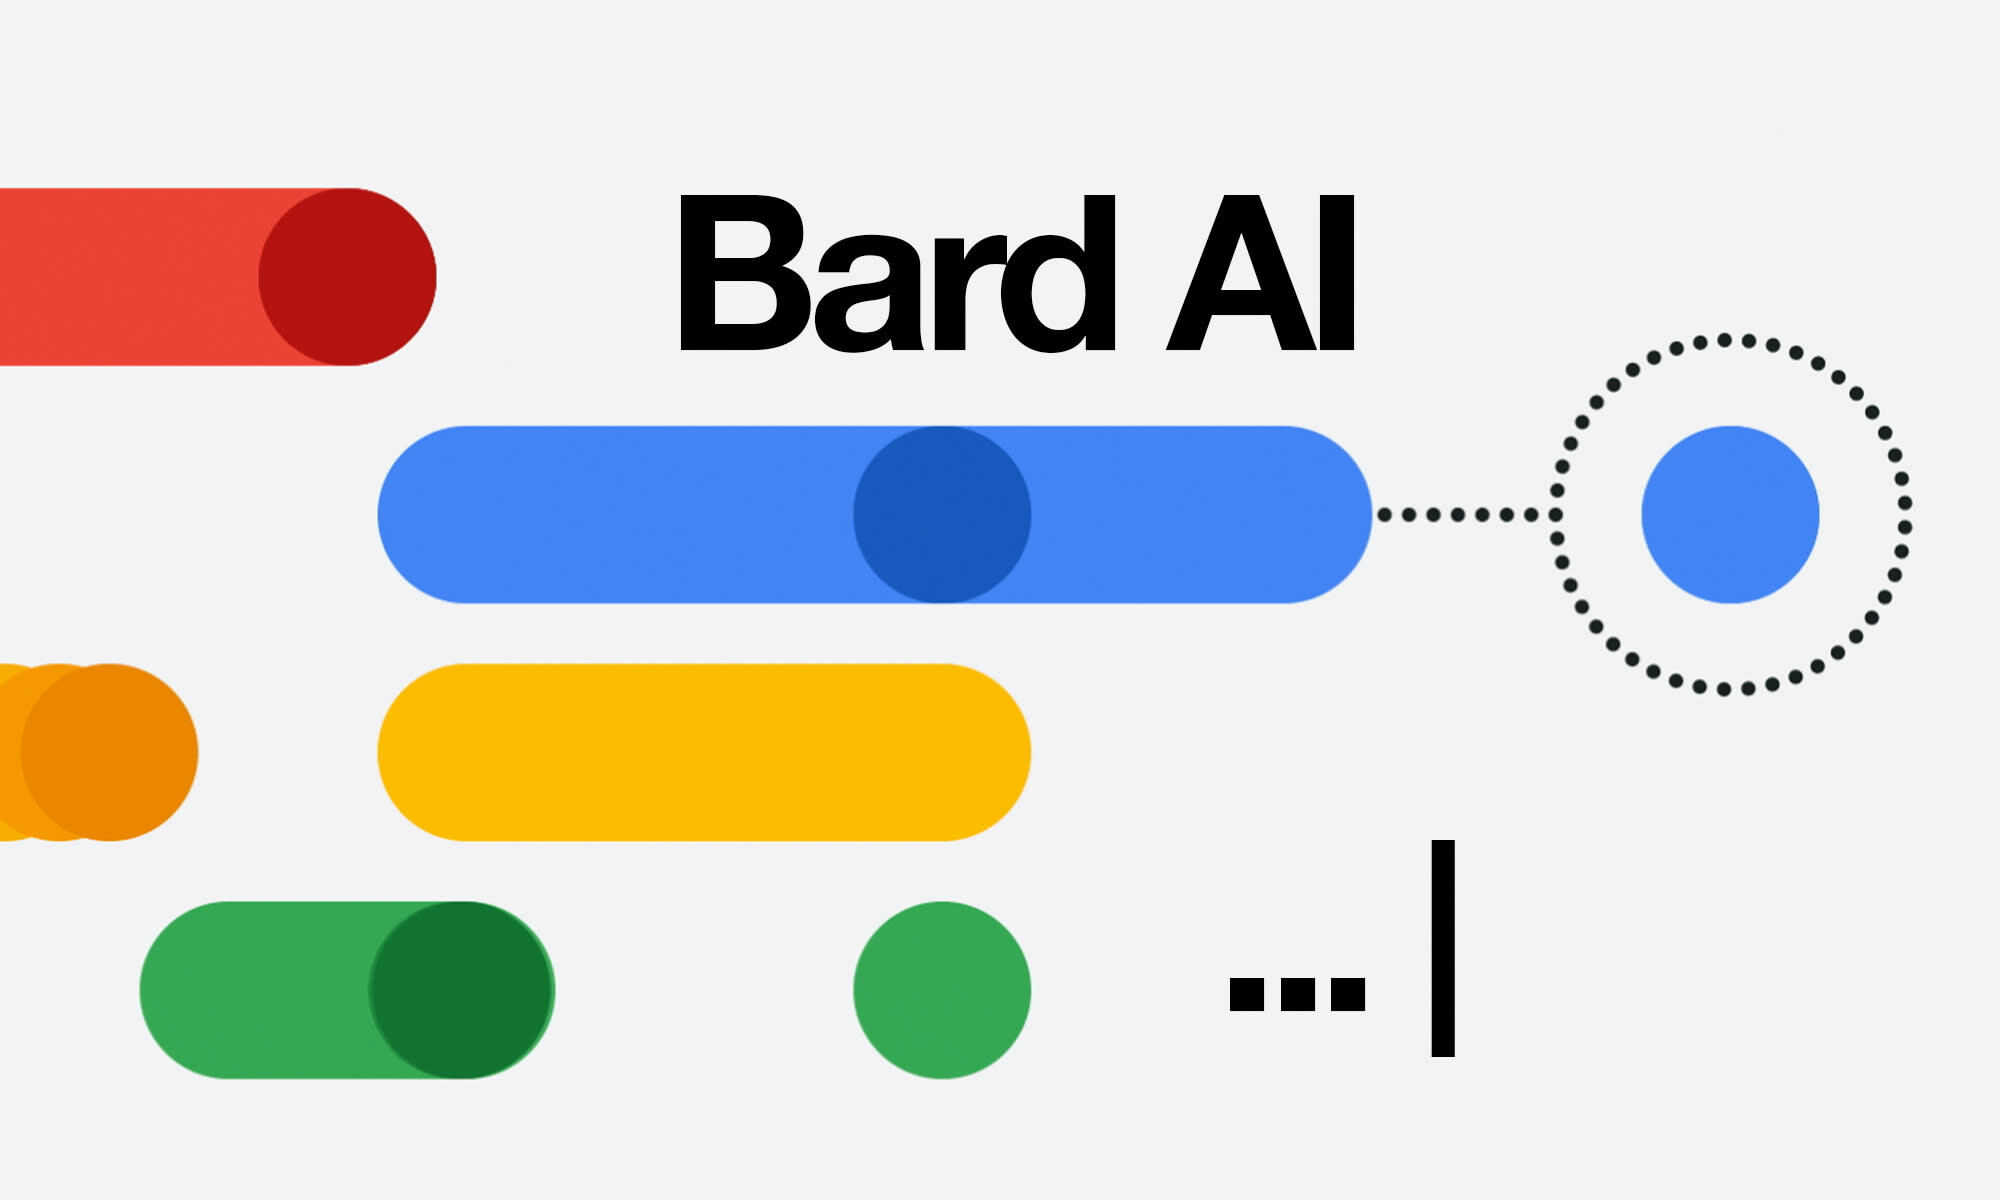 More information about "Bard AI: Tο εργαλείο τεχνητής νοημοσύνης της Google είναι διαθέσιμο πλέον και στην Ελλάδα"